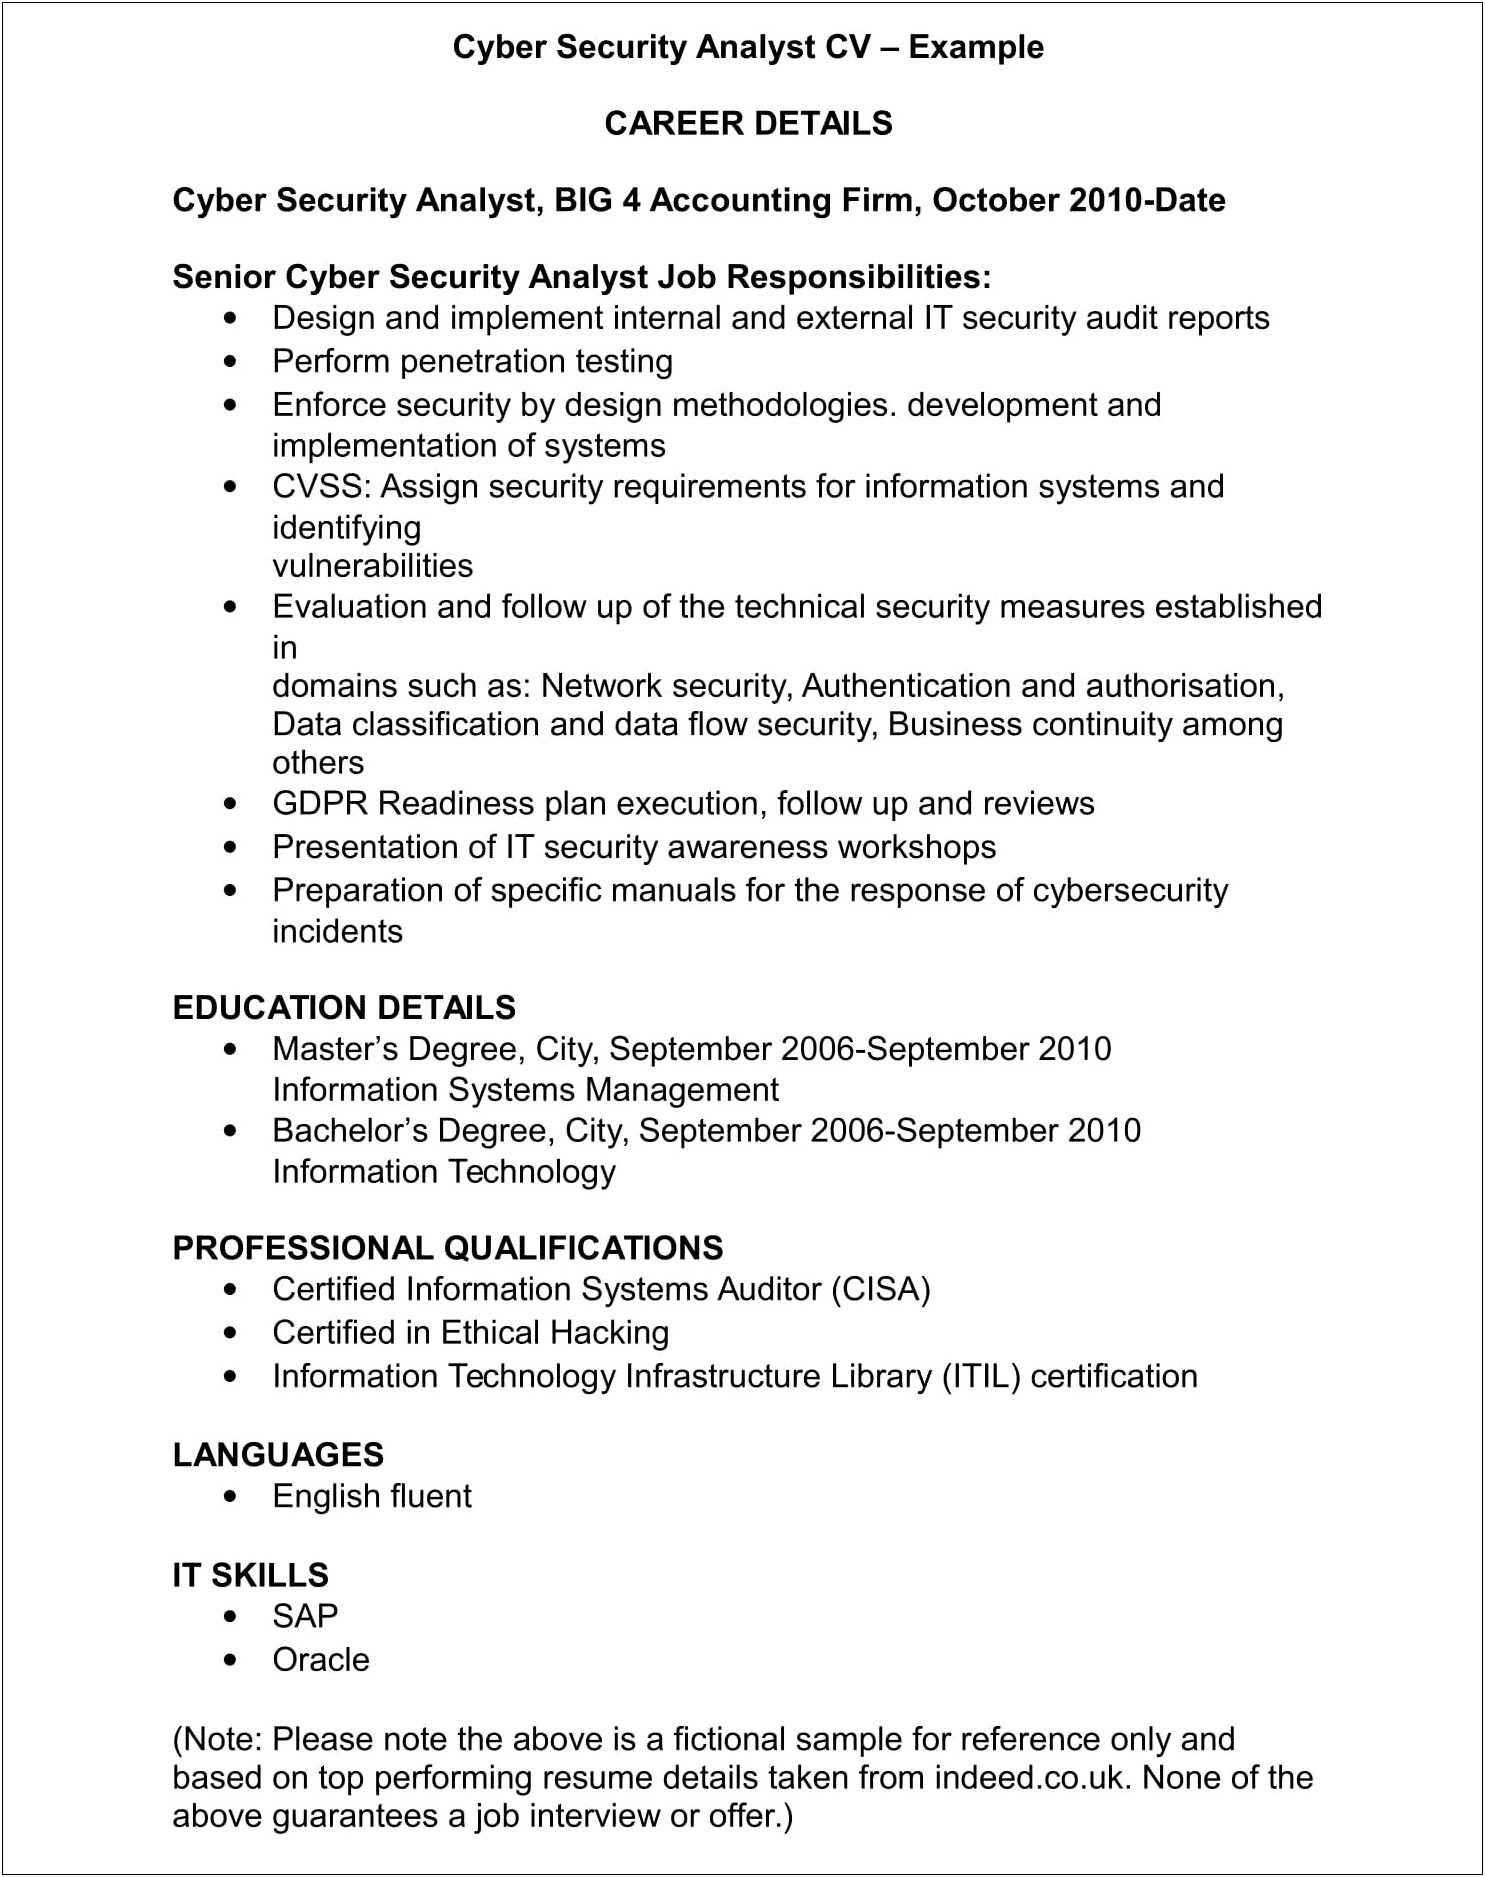 Resume Profile For Information Technology Job